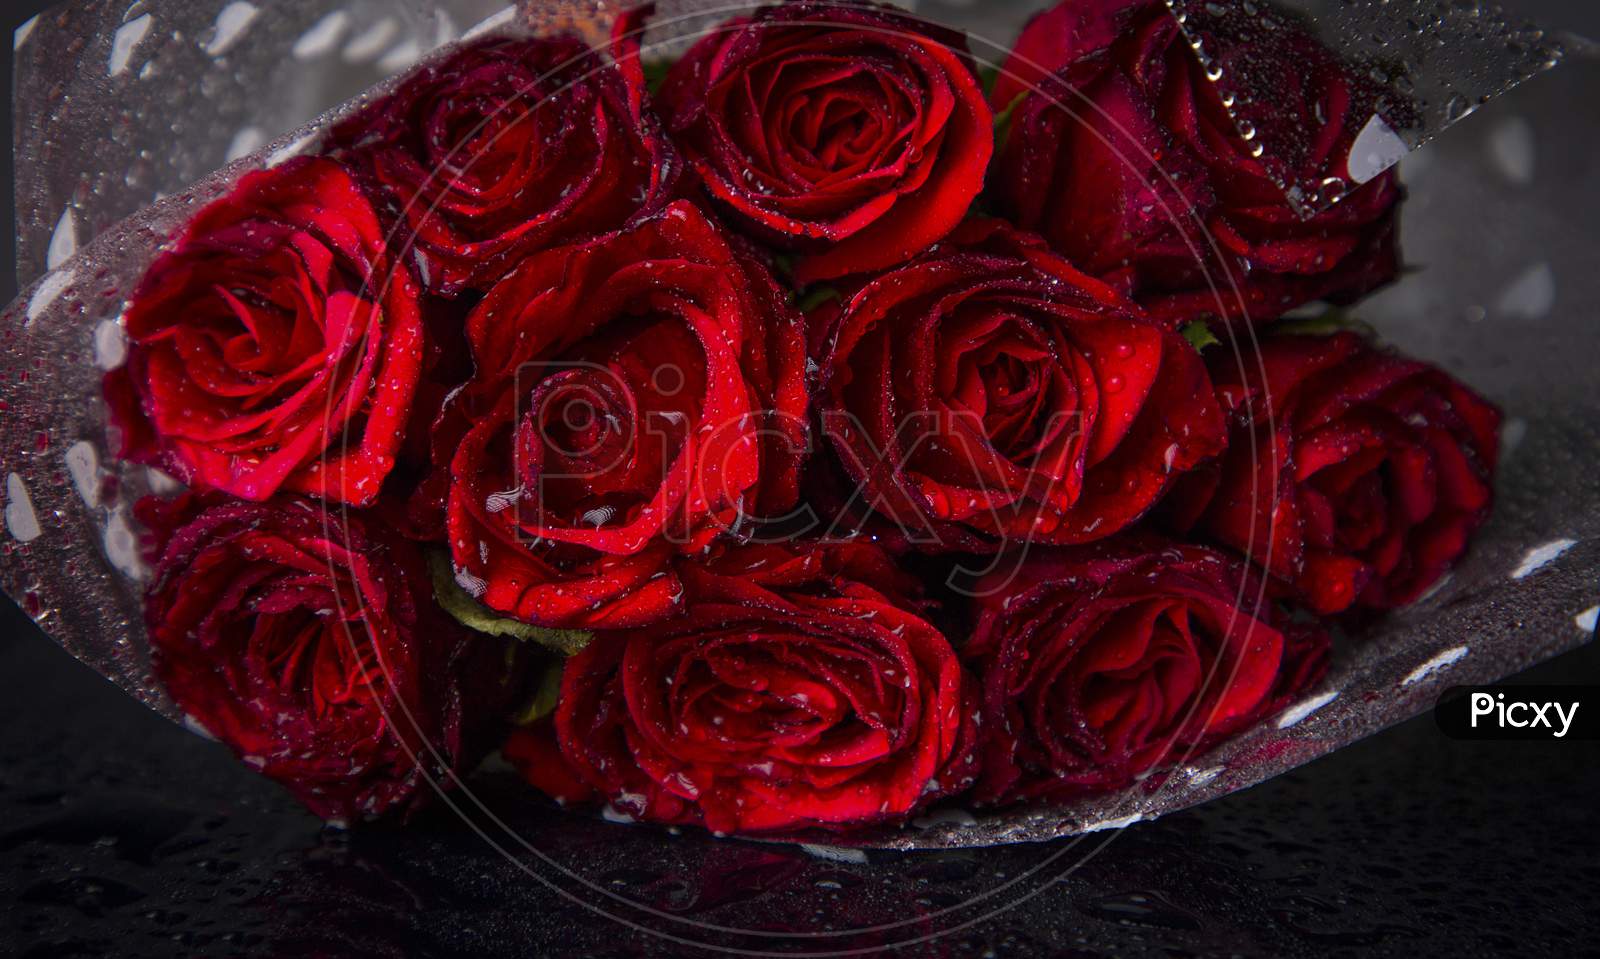 the dark red rose